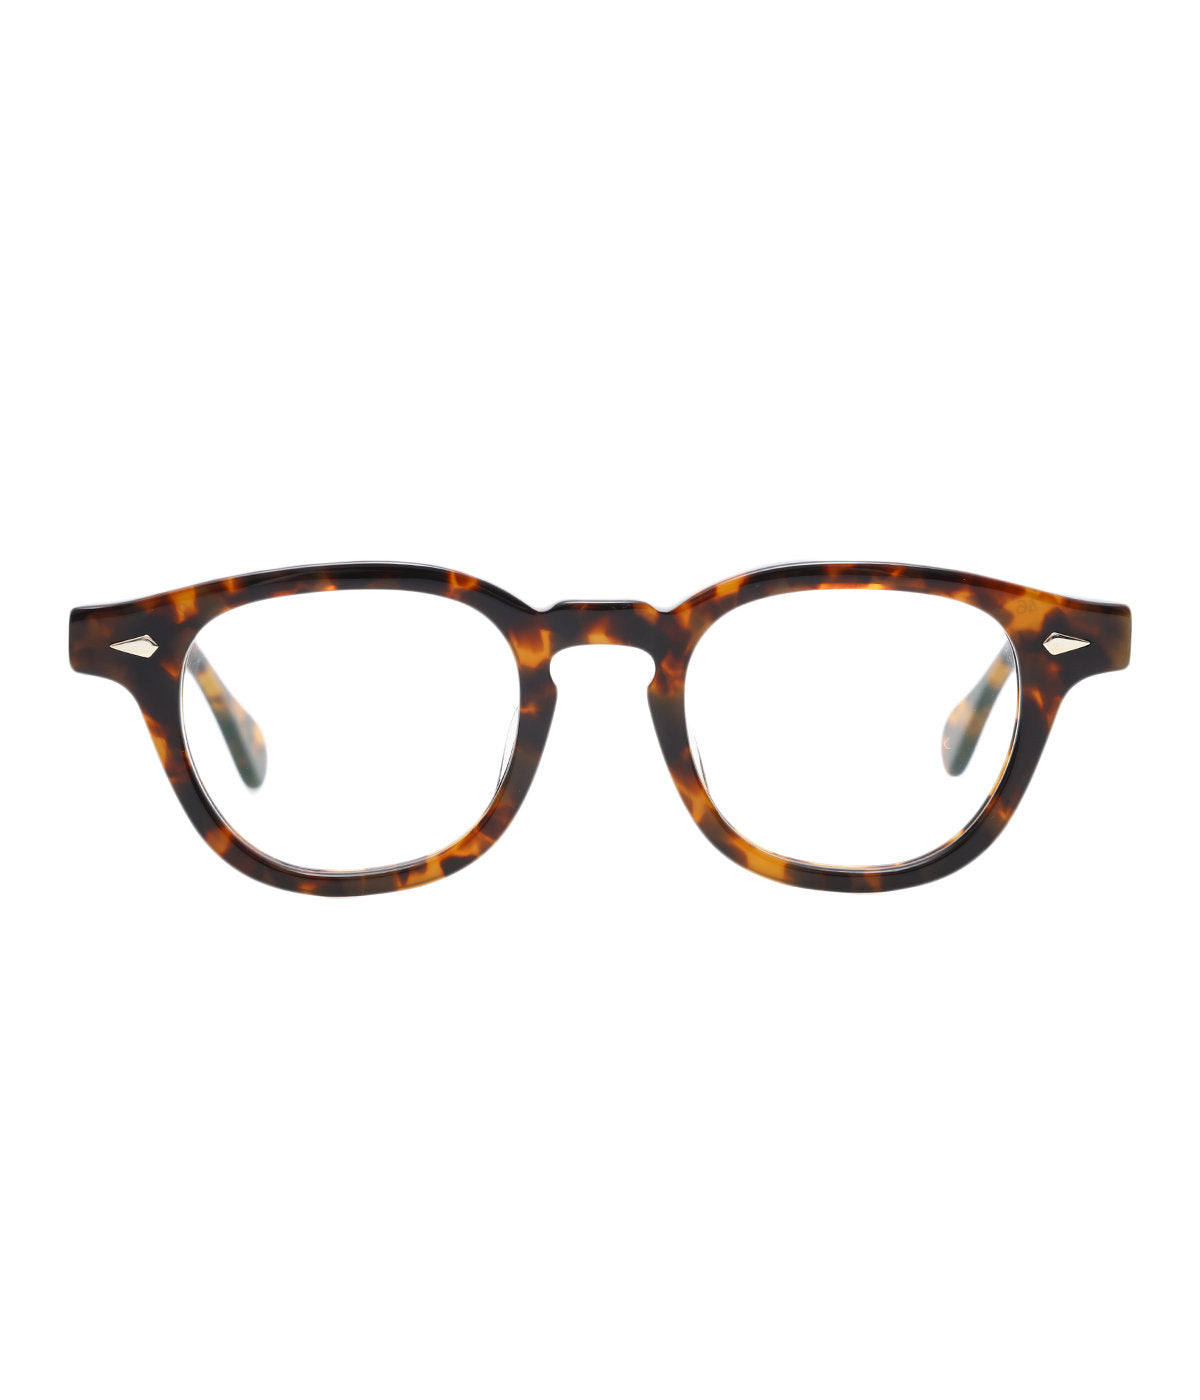 JULIUS TART OPTICAL AR Eyeglass Frame Tortoise – unexpected store